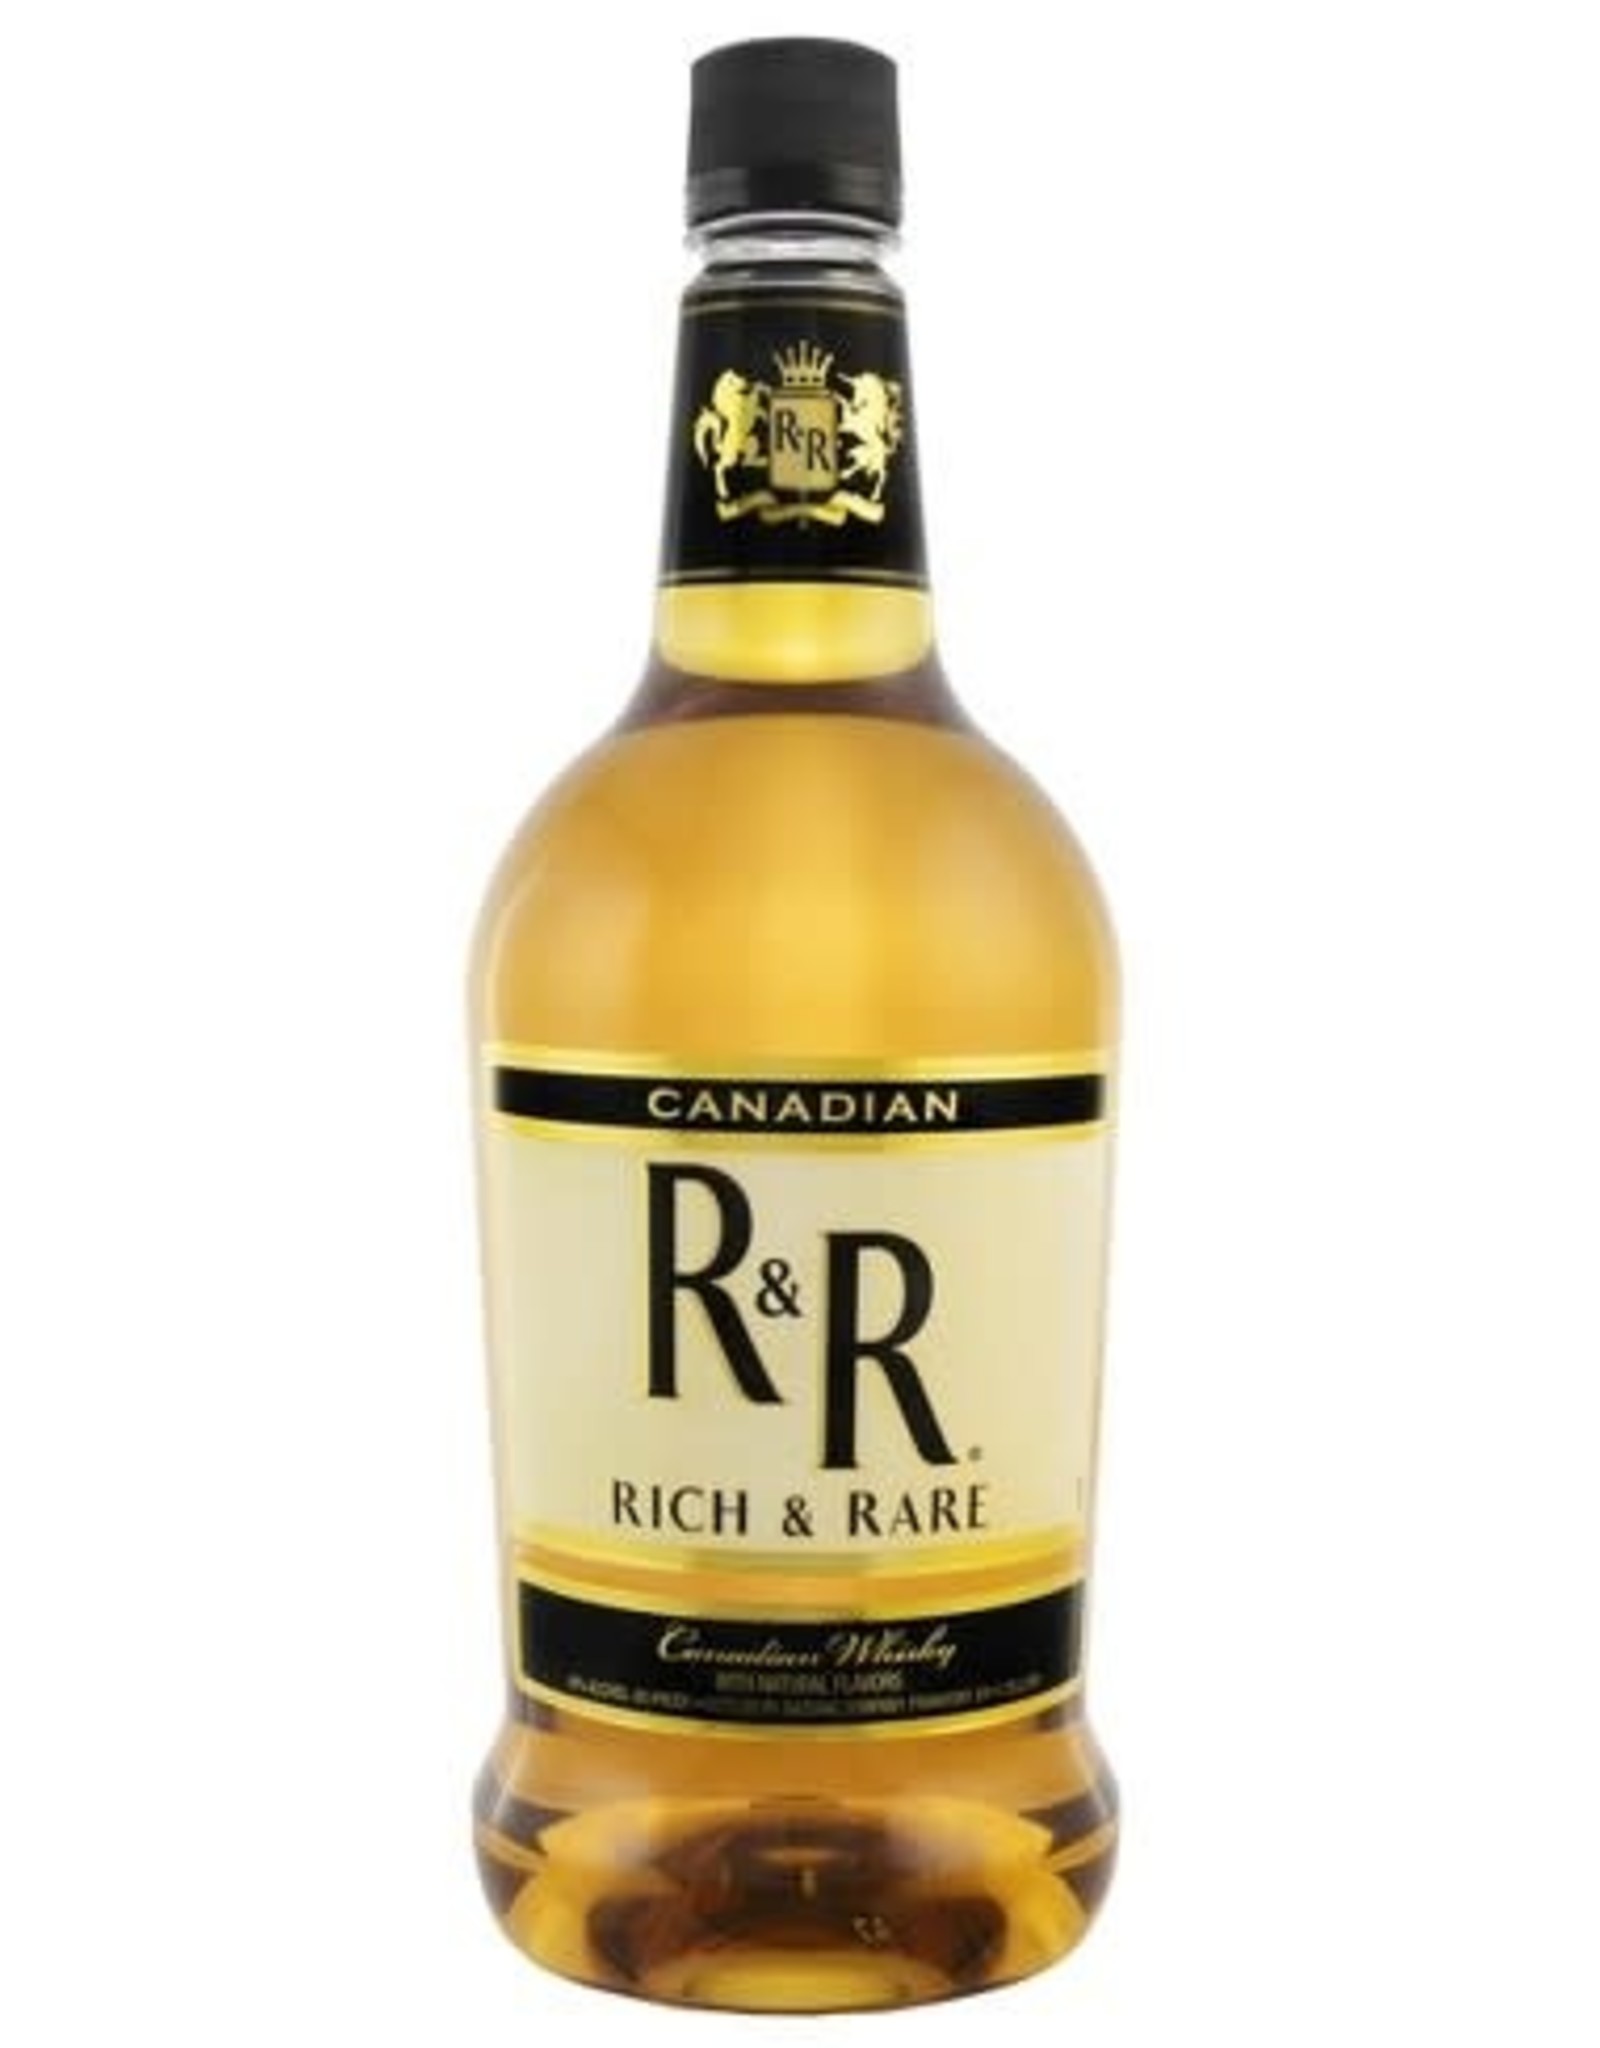 Rich & Rare RICH & RARE CANADIAN WHISKY 80 PR. 3 YR. 1.75 L